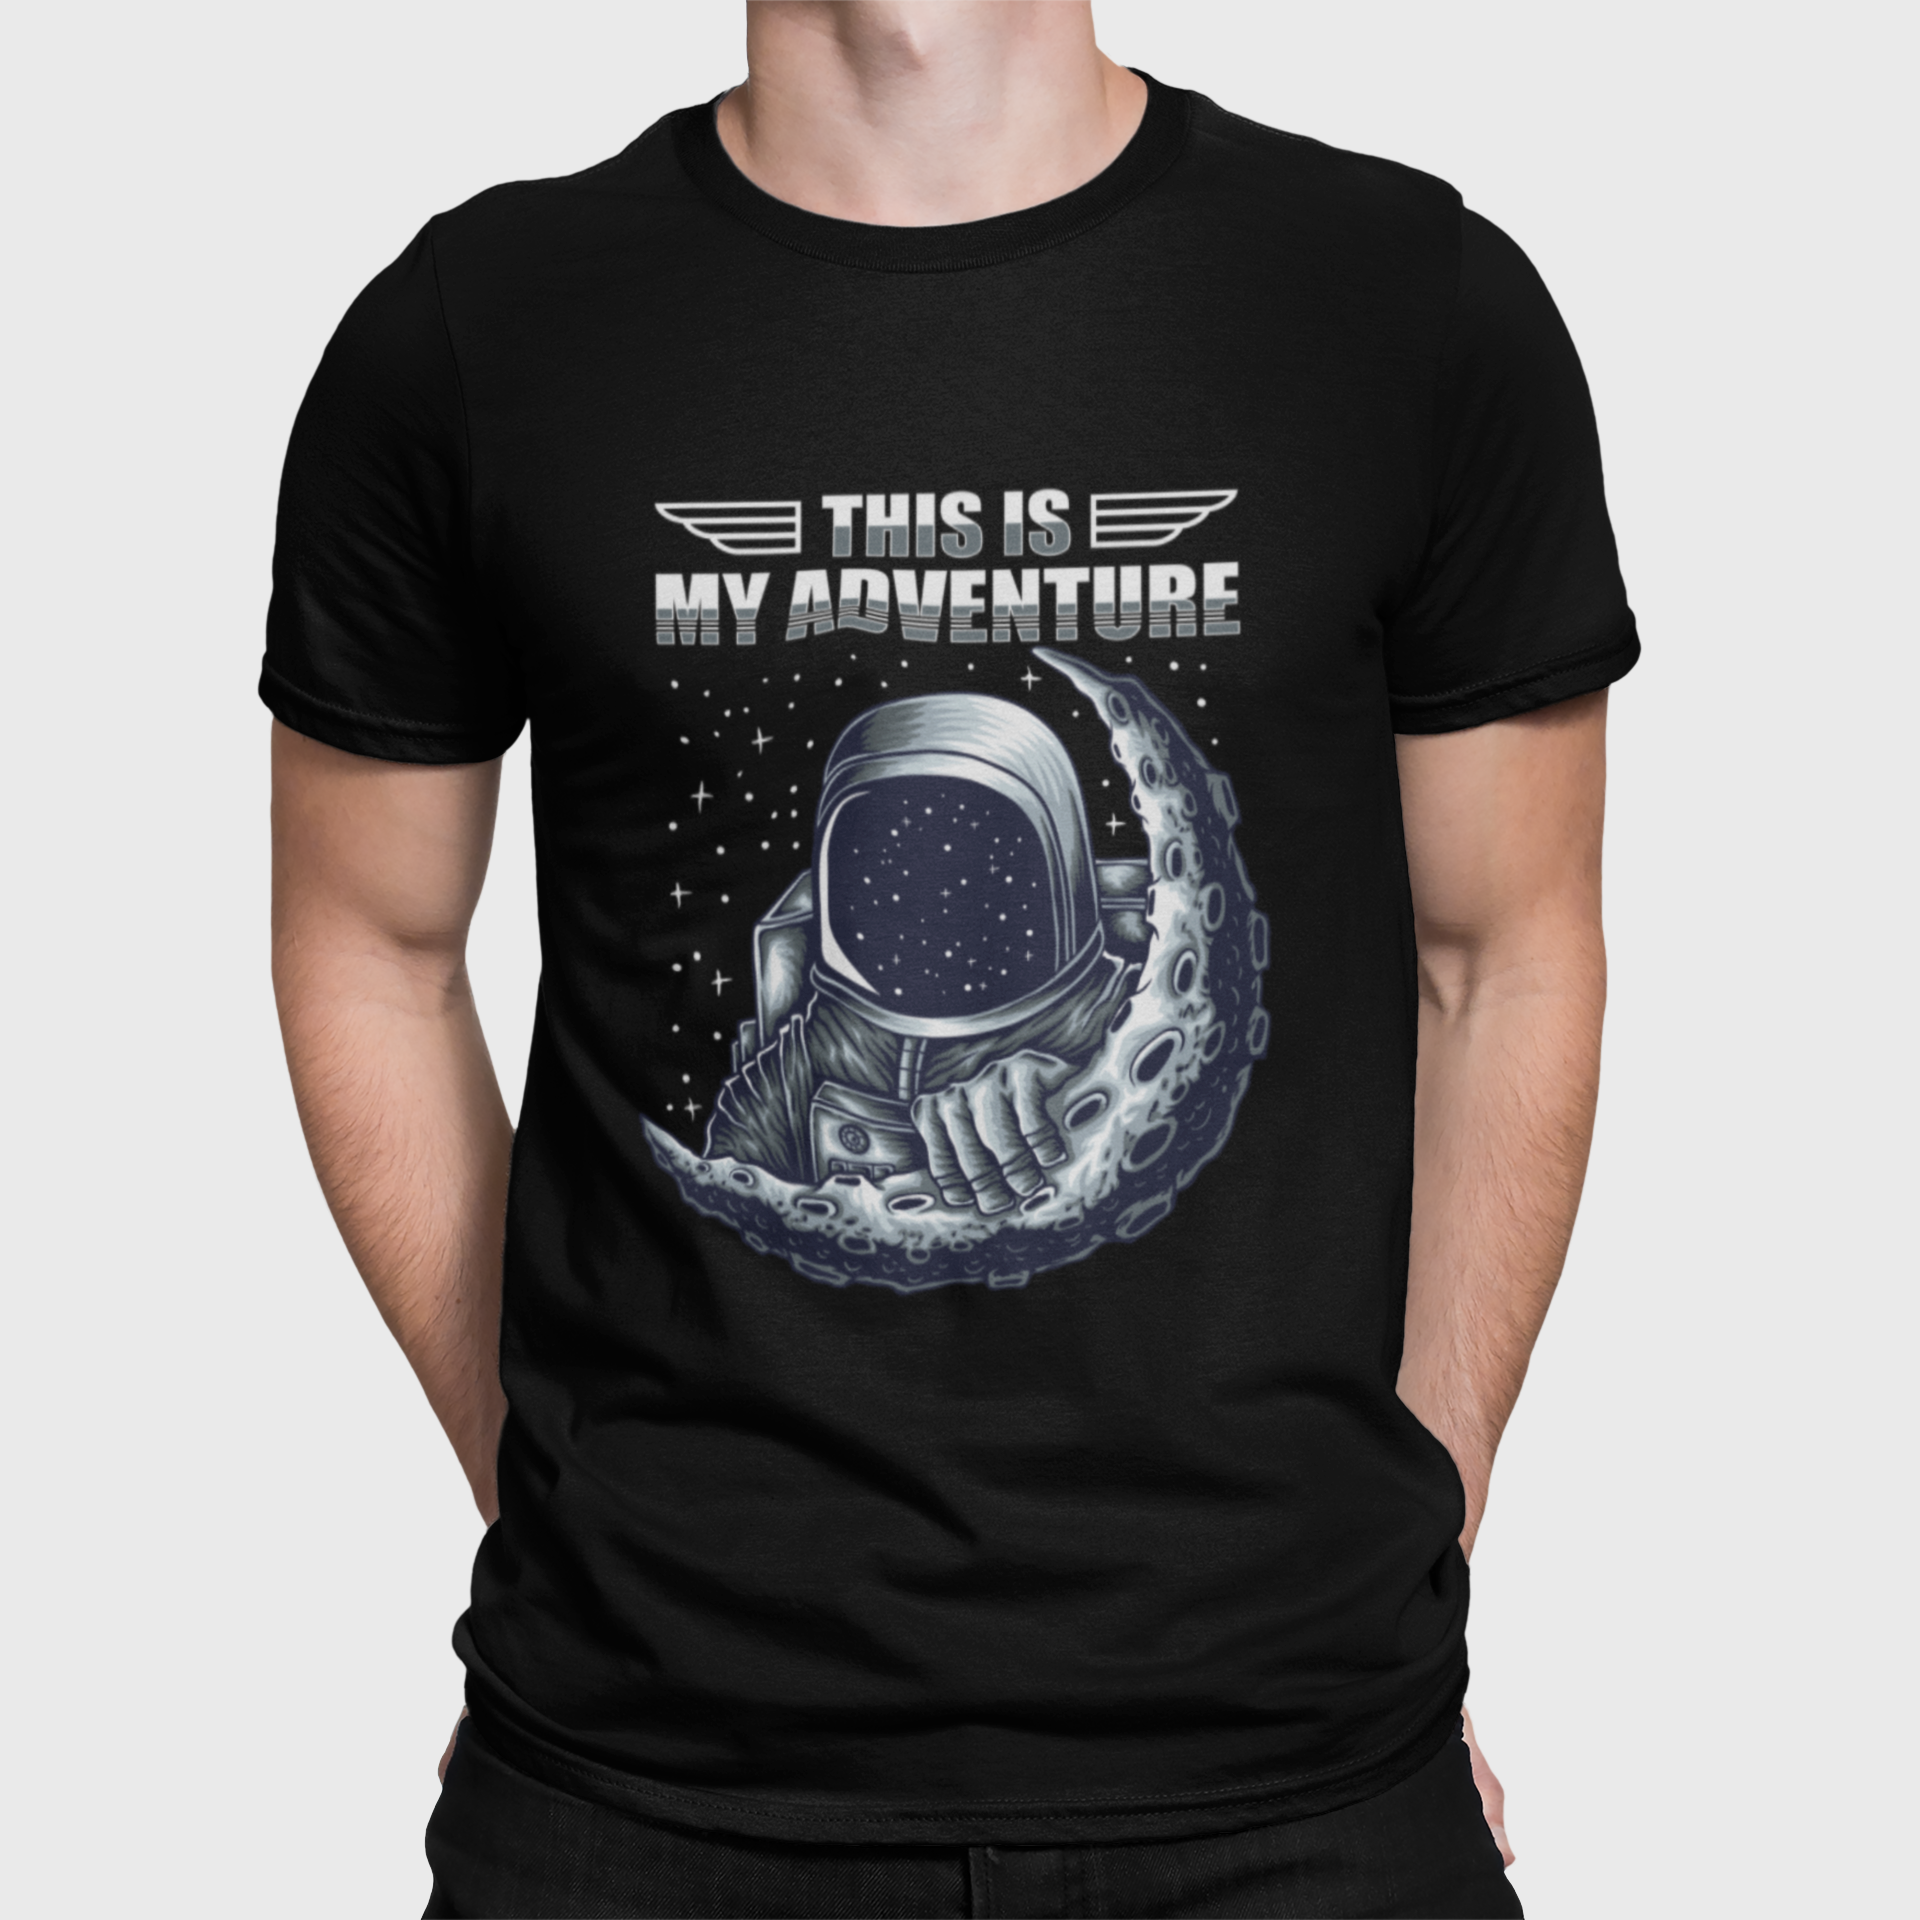 Astronaut Adventure Black Round Neck T-Shirt for Men.